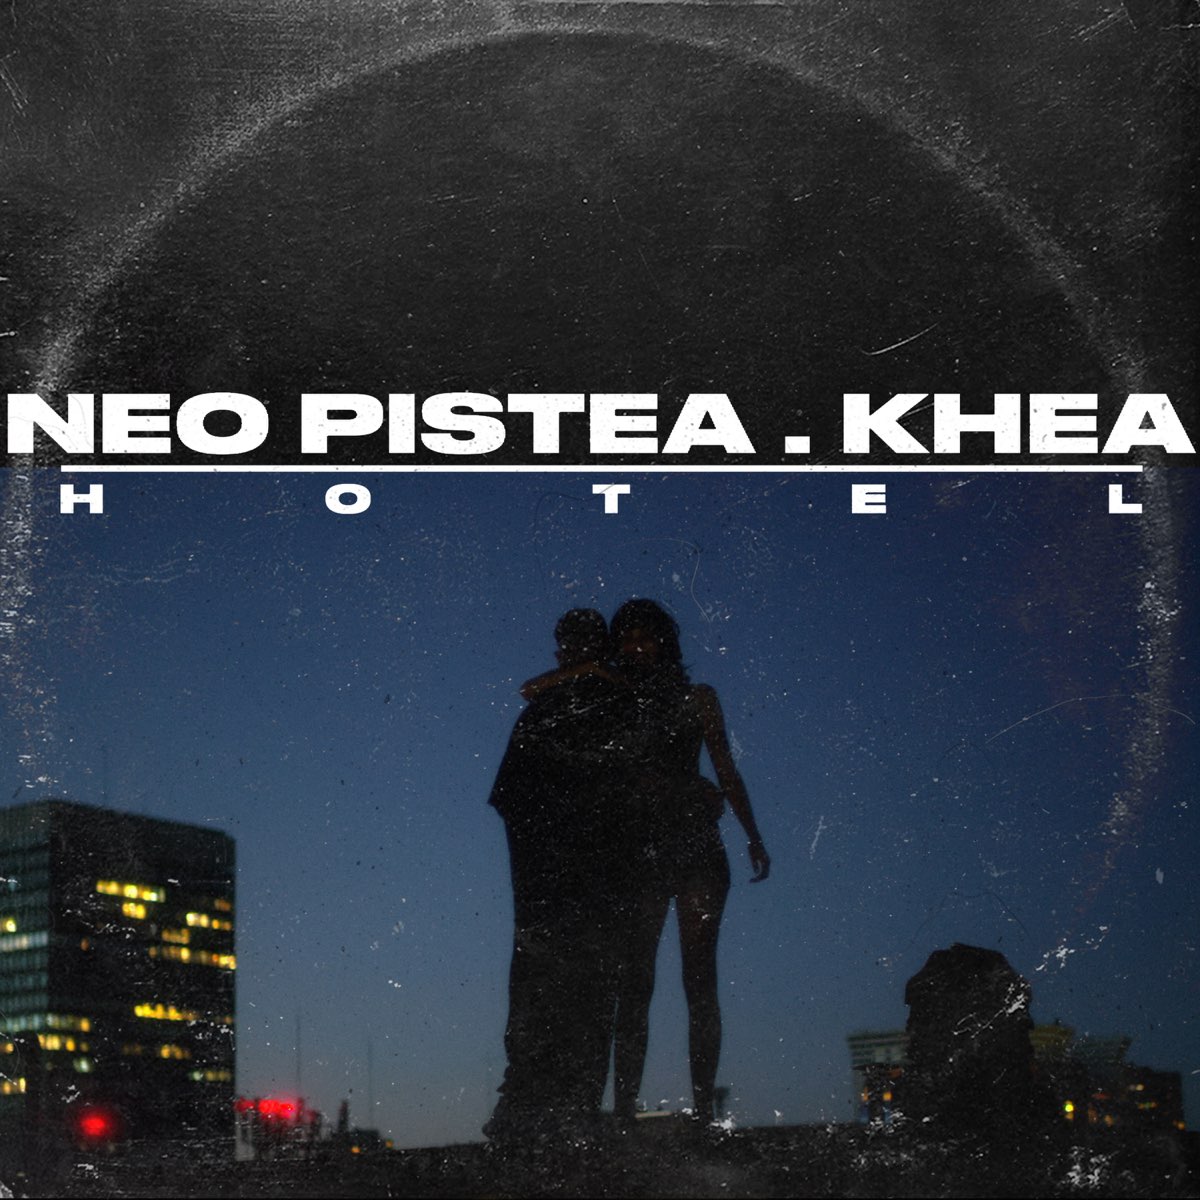 Hotel (feat. KHEA) - Single by Neo Pistea on Apple Music